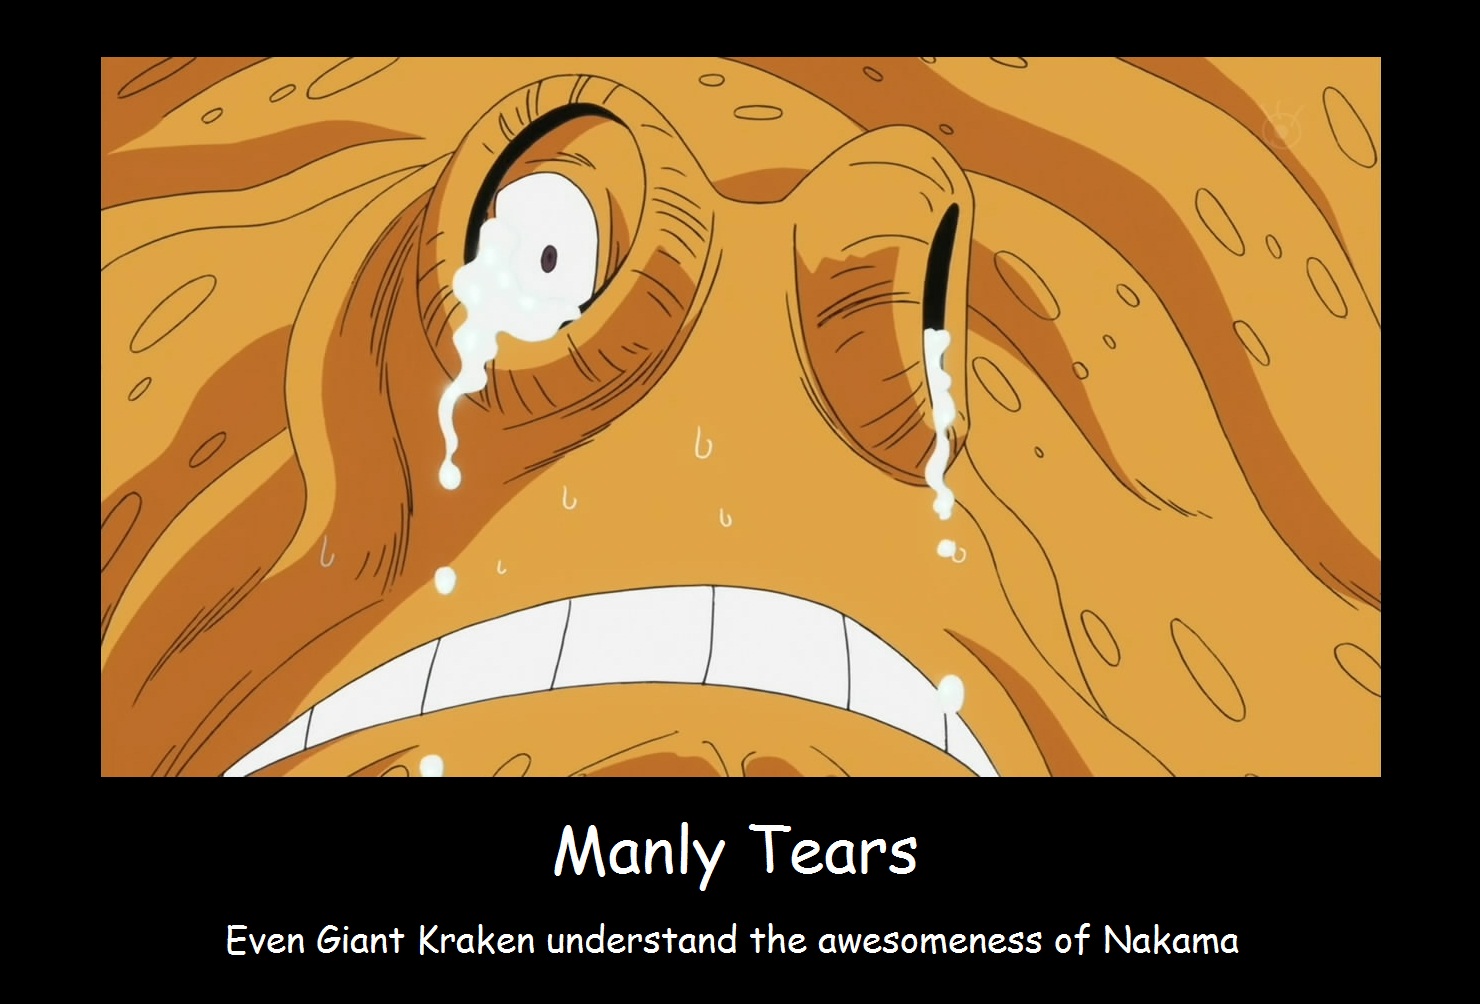 Manly Tears by neogoki on DeviantArt